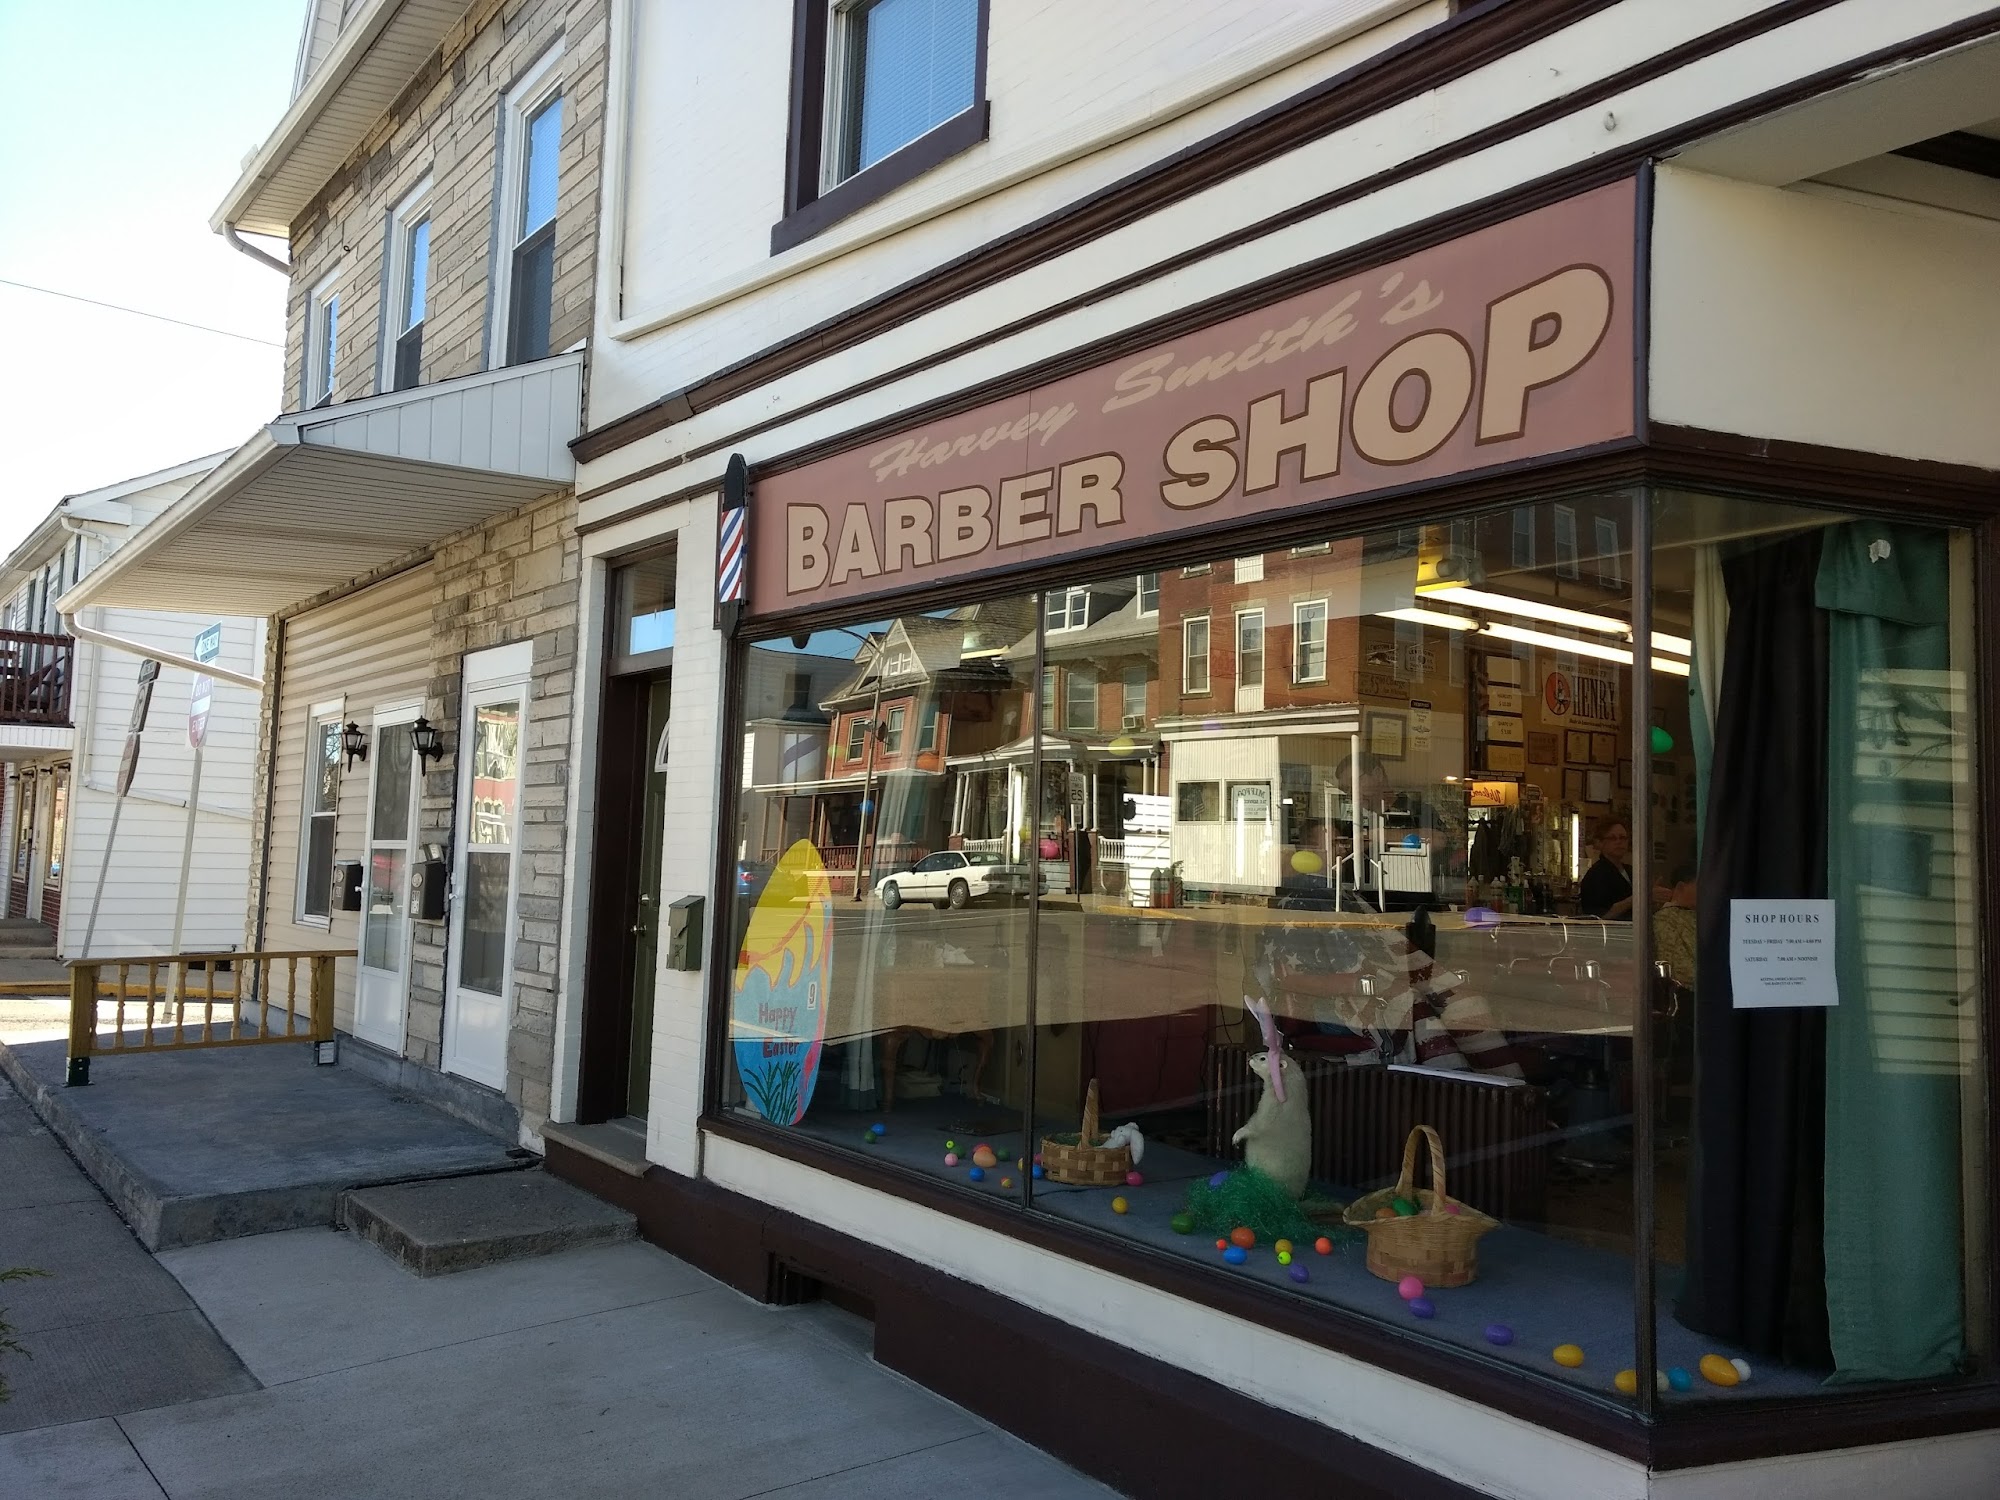 Harvey Smith's Barber Shop 204 W Market St, Lewistown Pennsylvania 17044